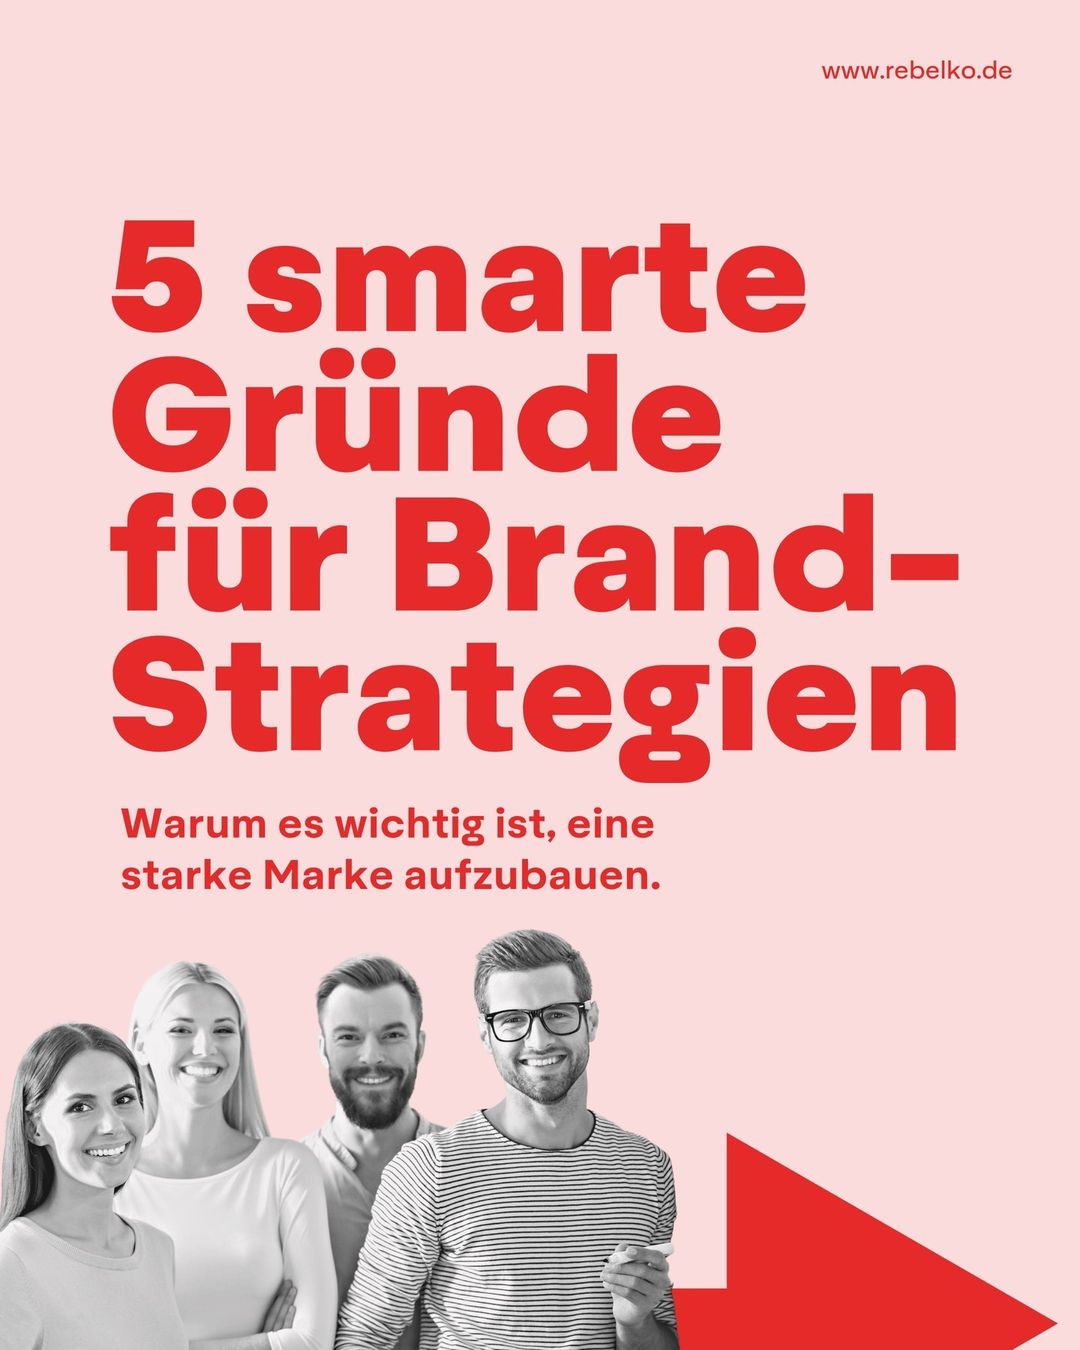 5 gruende fuer brand strategien REBELKO Agentur Aachen Marketing  Design Kreativ Strategie Social Media Konzeption Beratung Creatives Digital 01